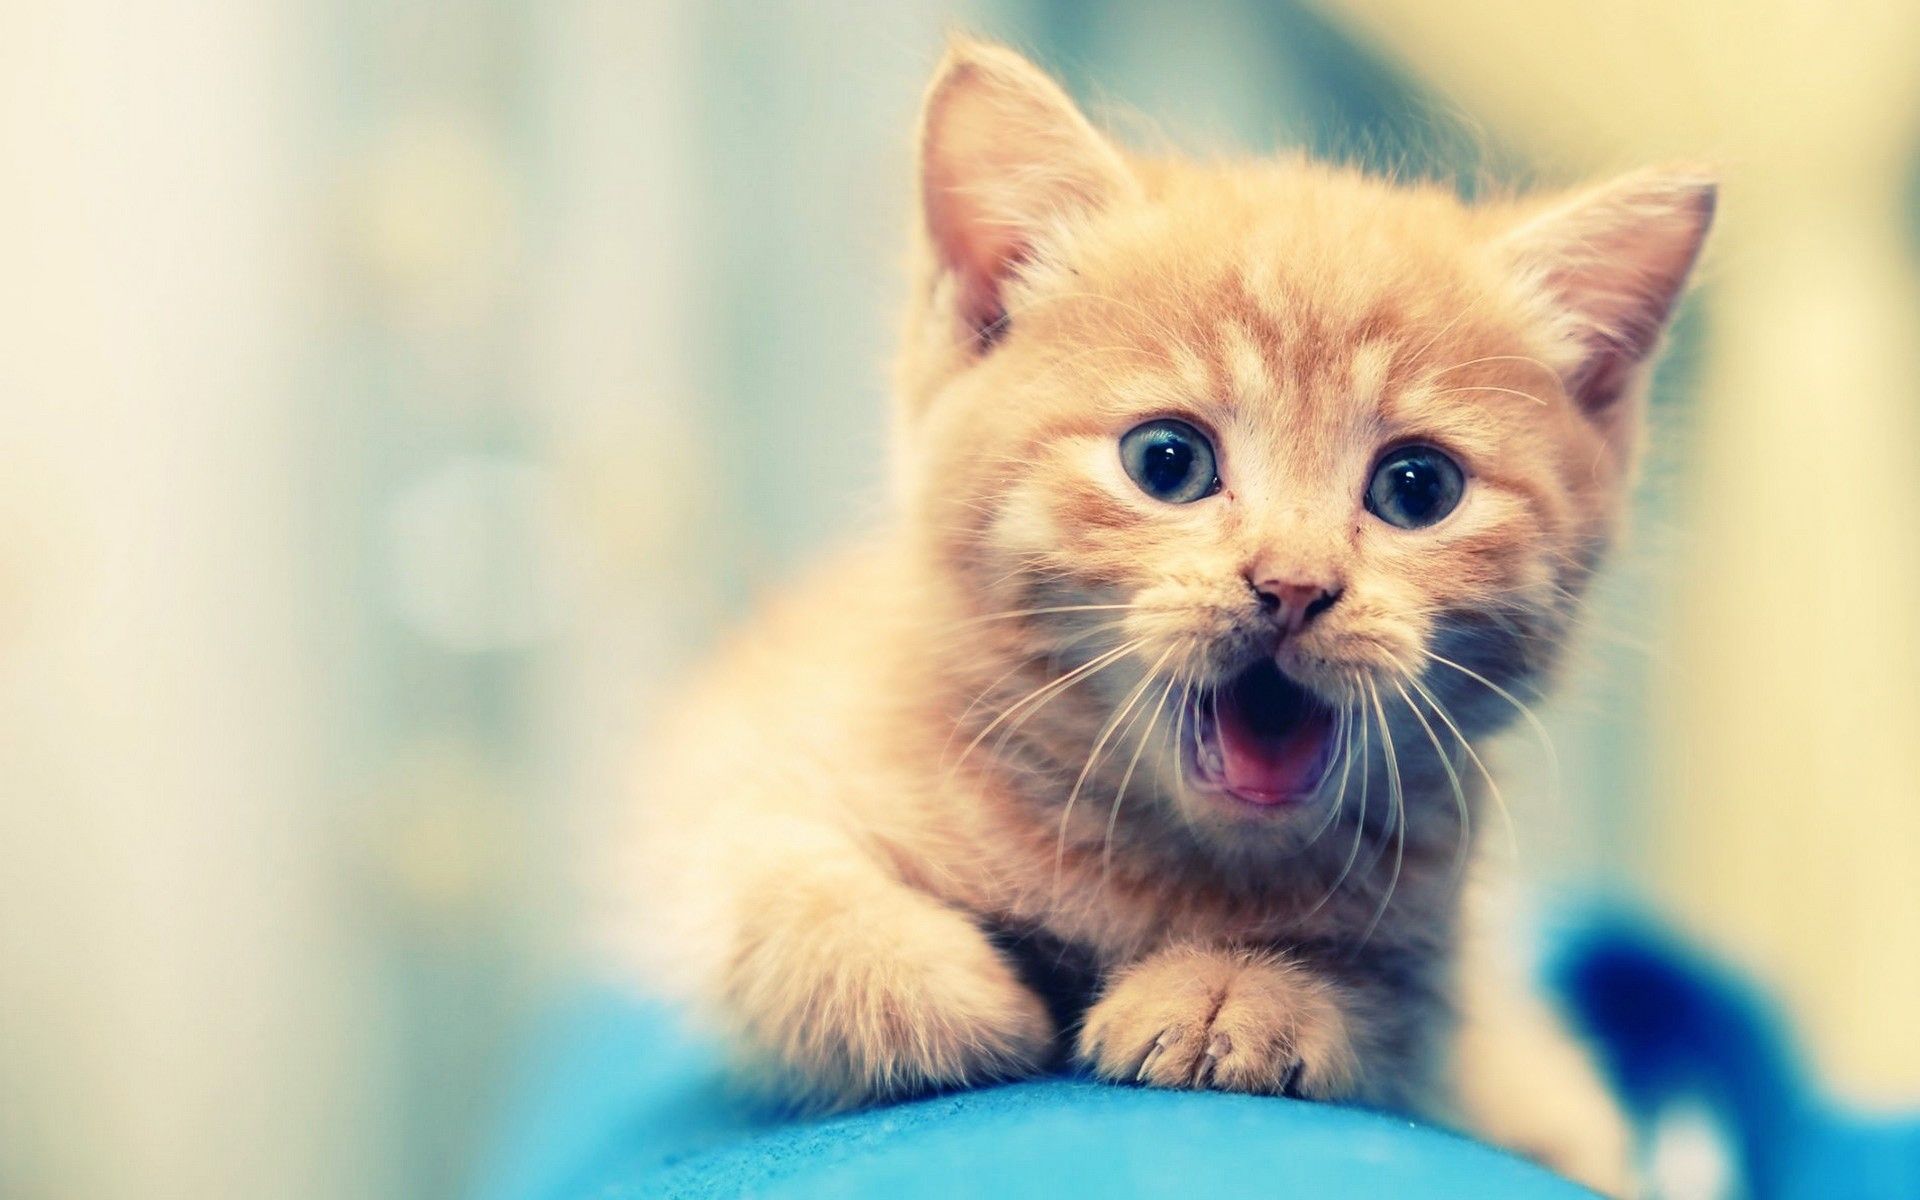 Cute cat animal wallpapers for desktop background full screen - HD